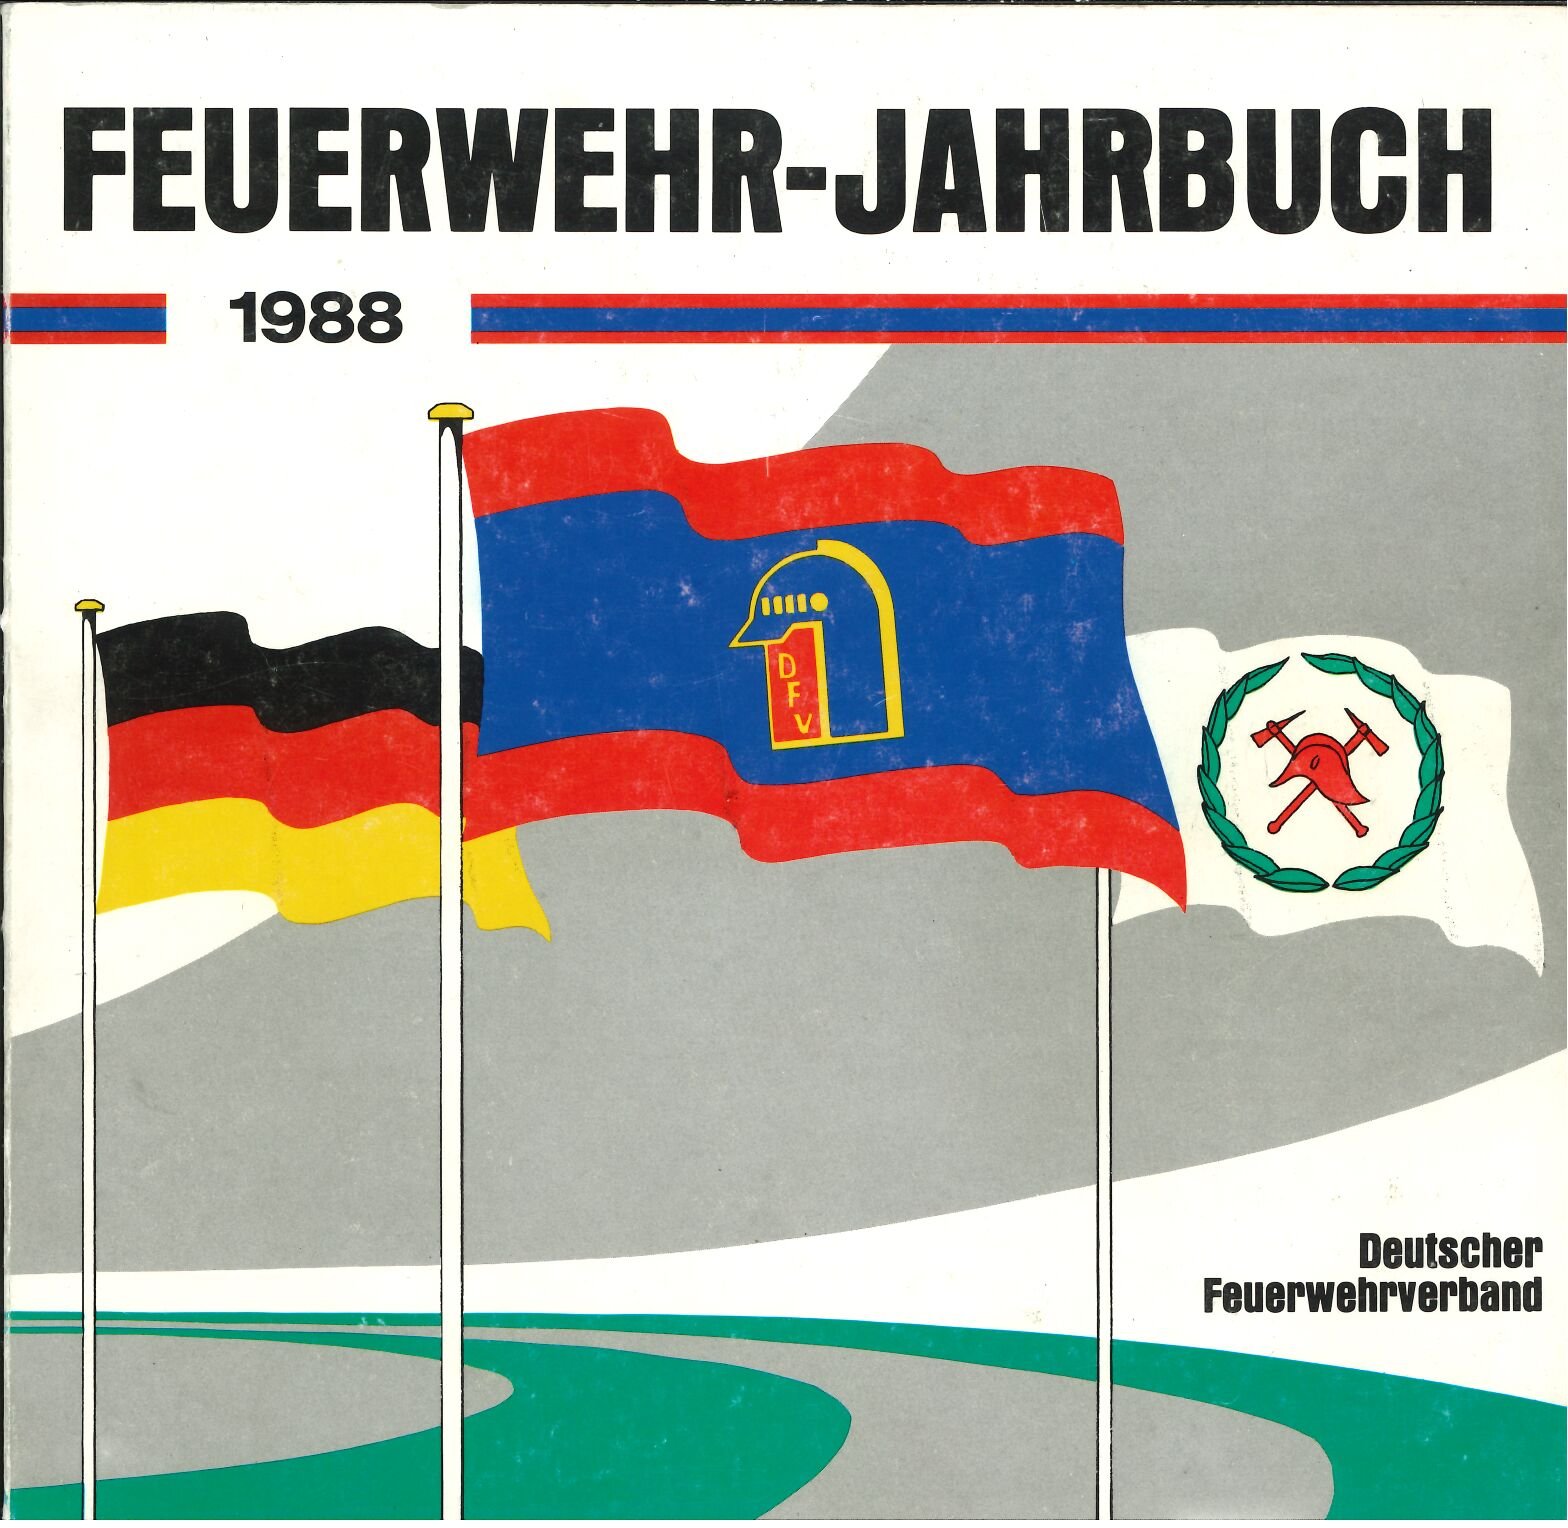 Feuerwehr-Jahrbuch 1988 (Feuerwehrmuseum Grethen CC BY-NC-SA)